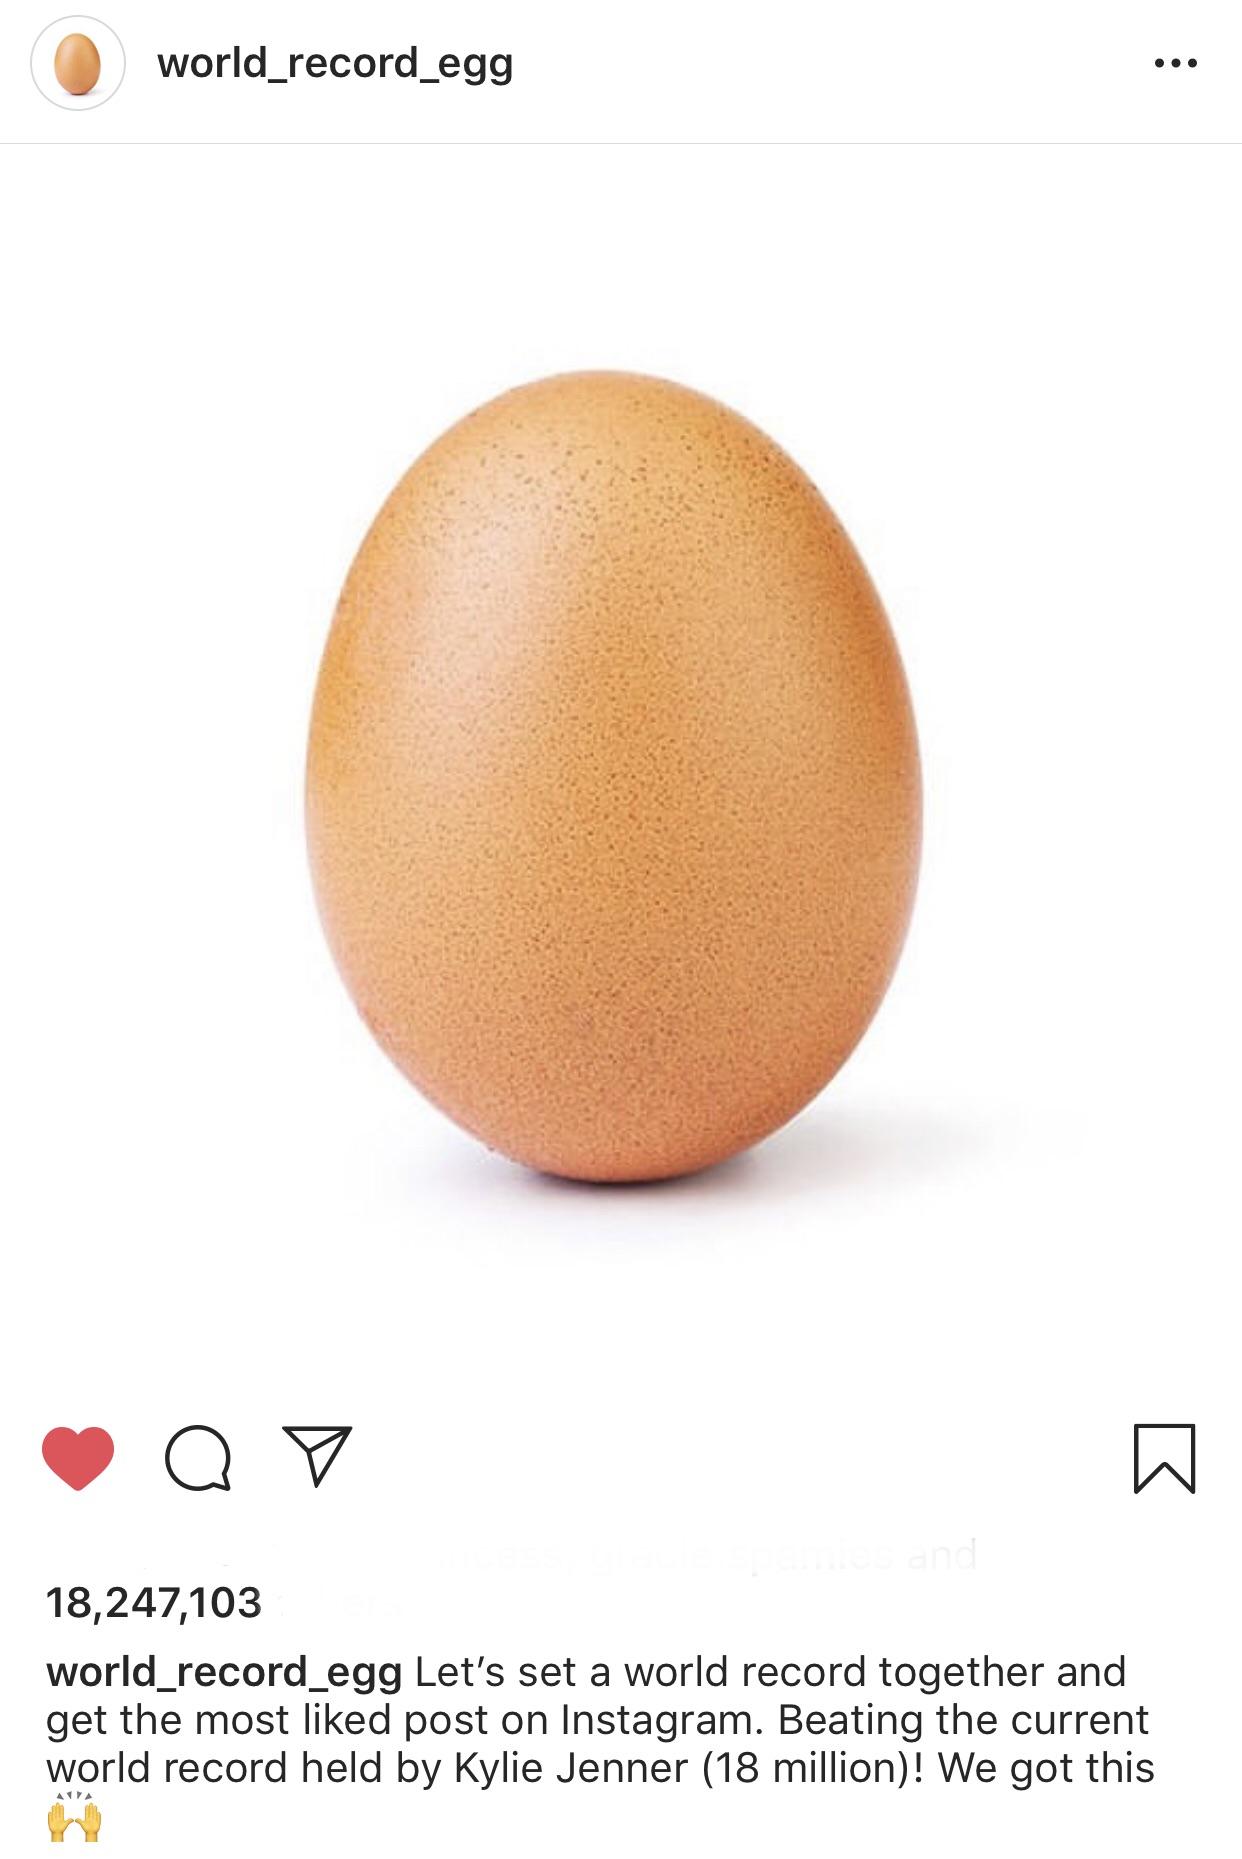 The egg that surpassed Kylie Jenner on Instagram.